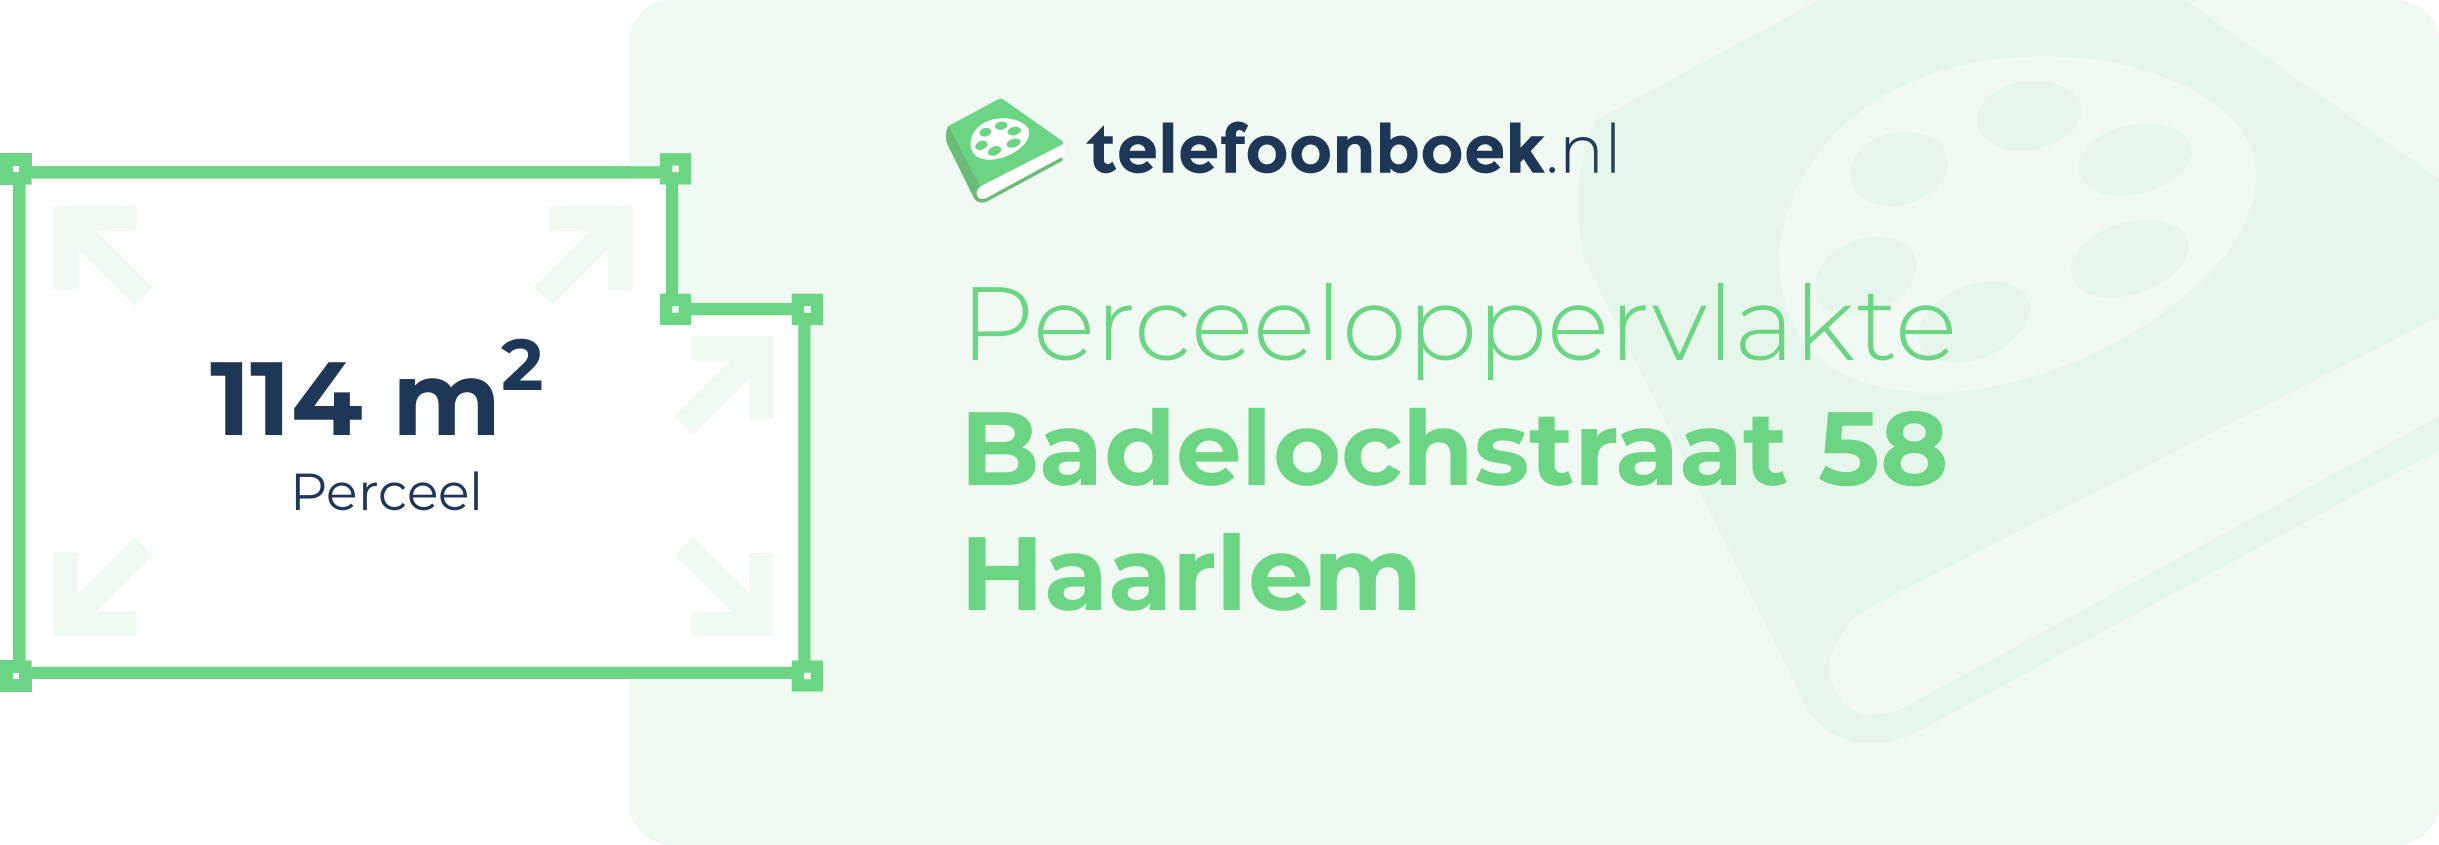 Perceeloppervlakte Badelochstraat 58 Haarlem